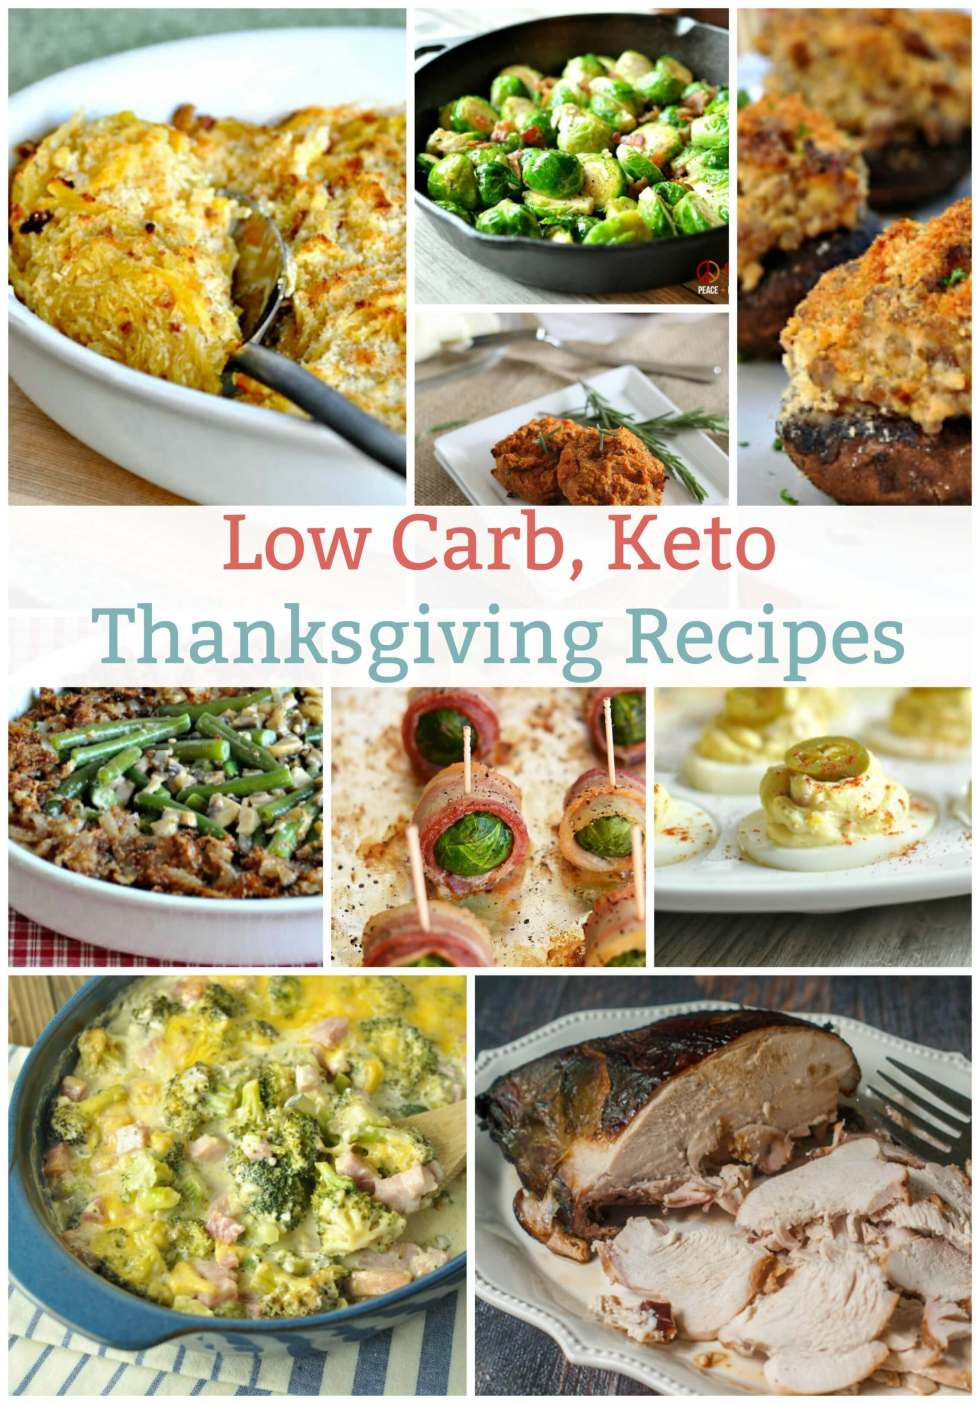 Low Carb Thanksgiving Recipes
 Low Carb Keto Thanksgiving Recipes